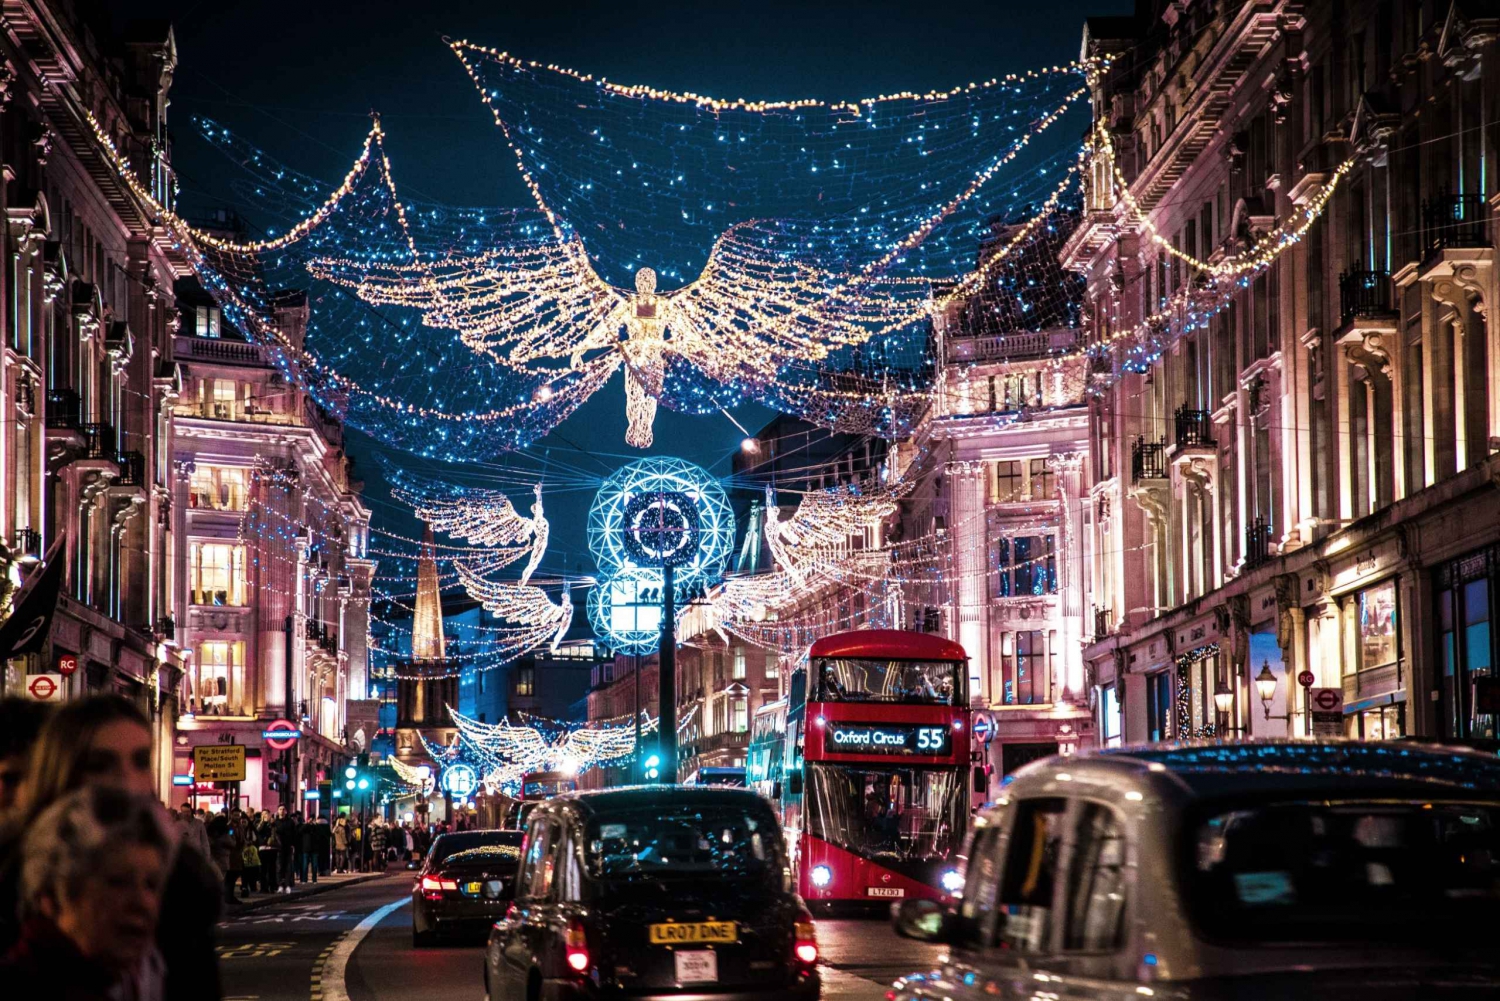 Londra: tour delle luci natalizie in bus vintage scoperto